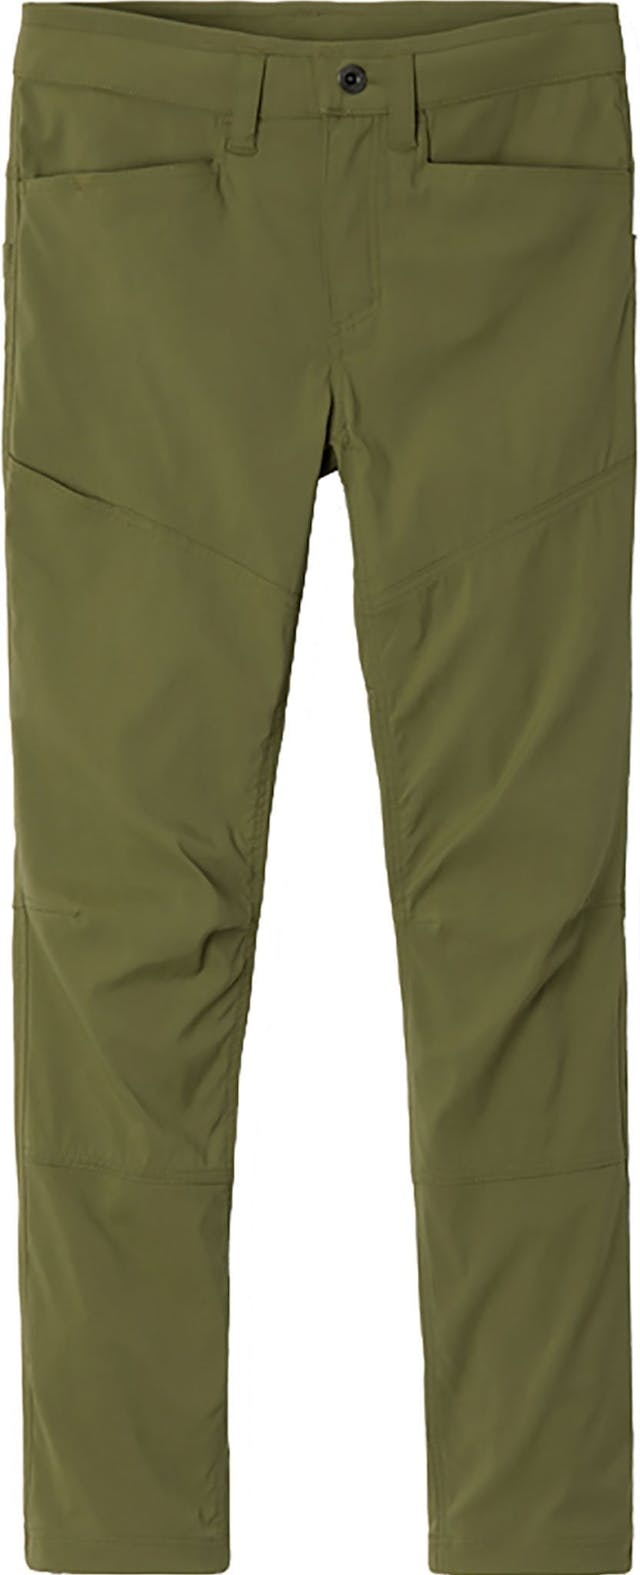 Product image for Hardwear AP Active Pant - Men's